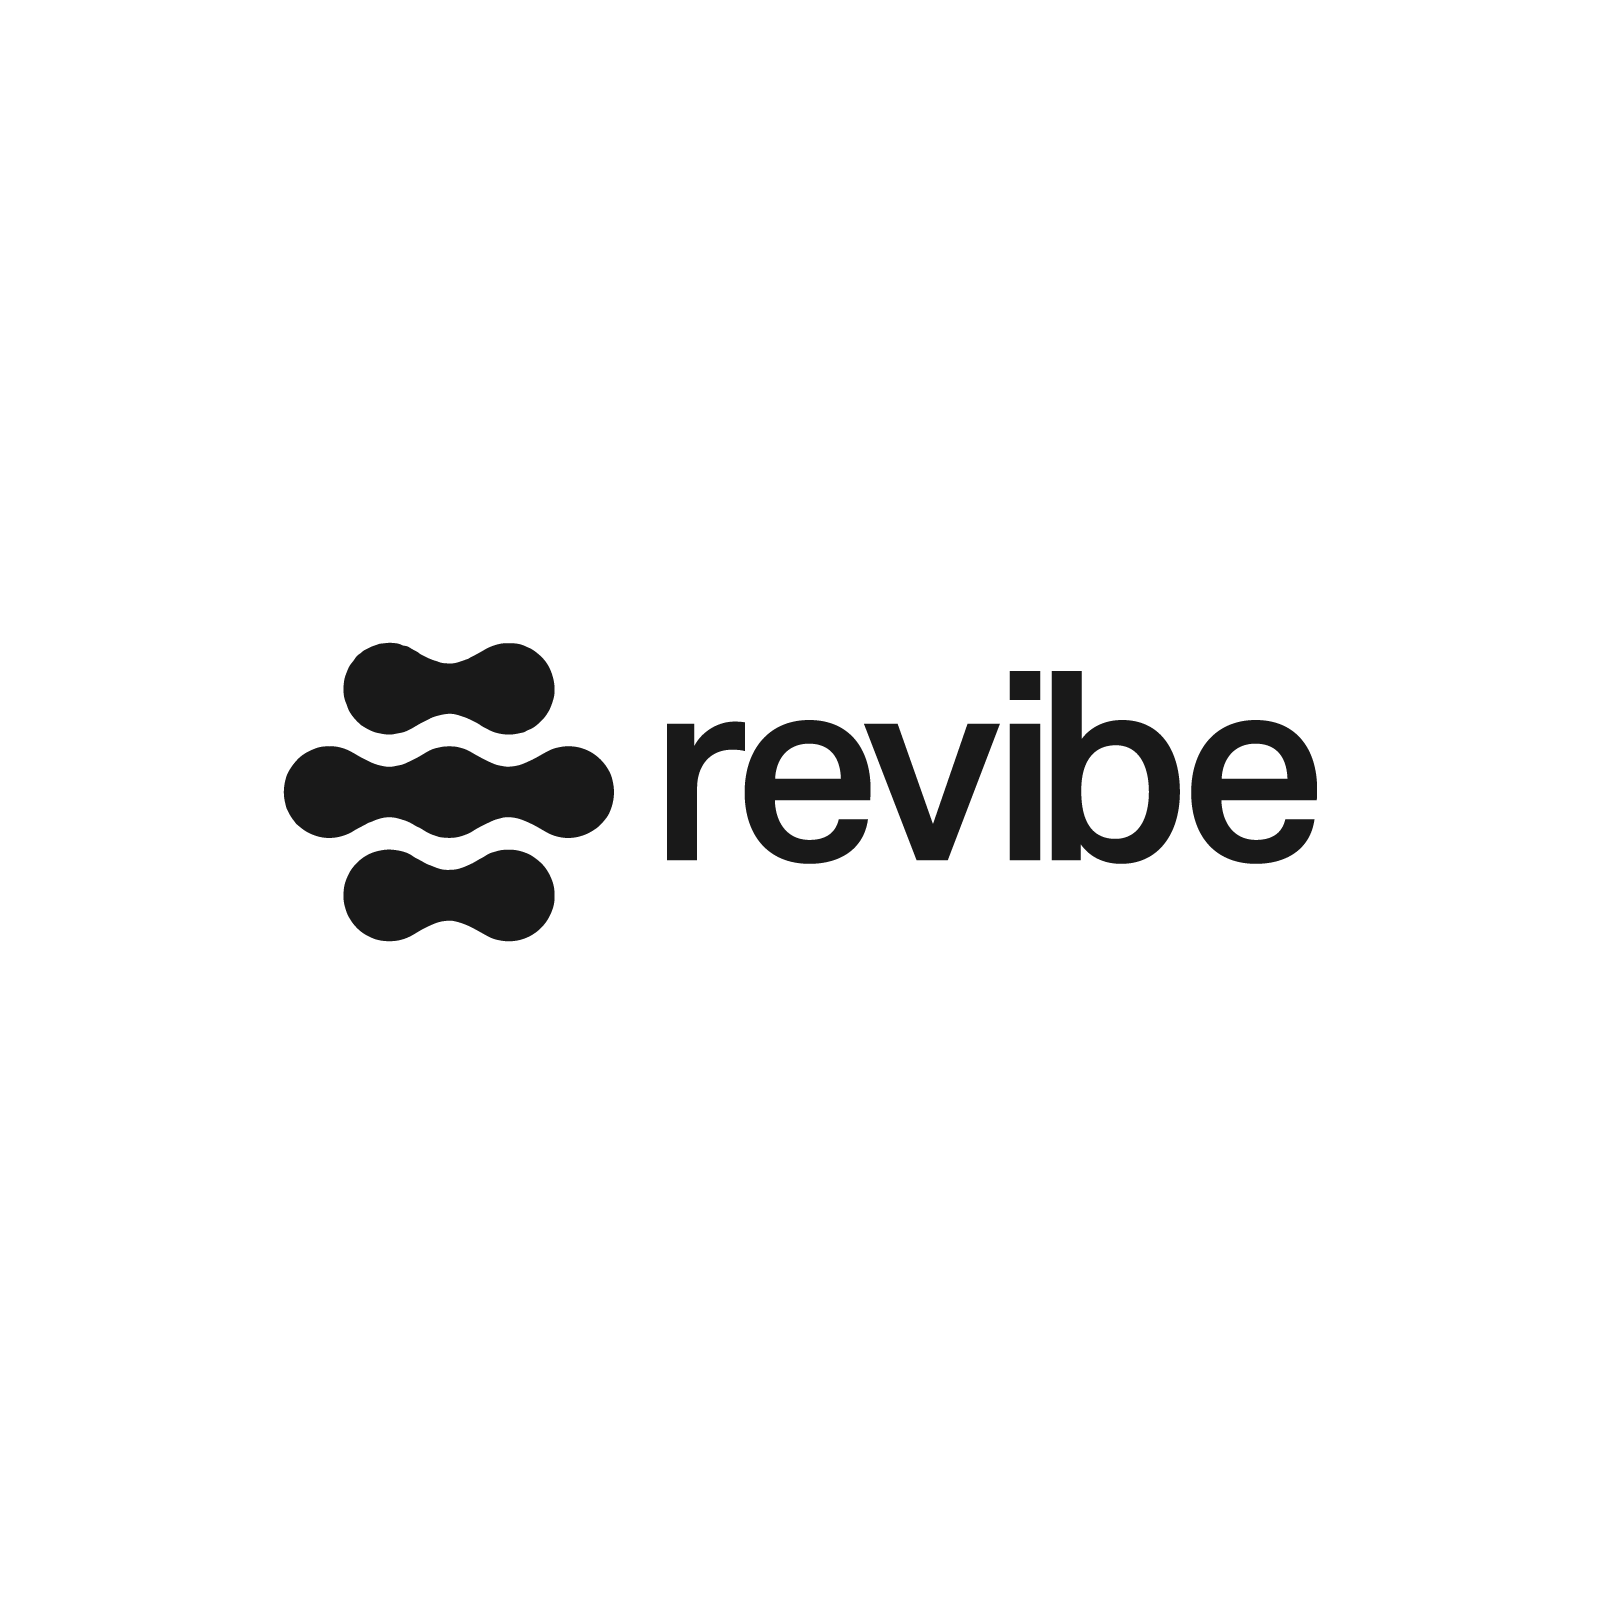 revibe_logo_voidwhite (1).png